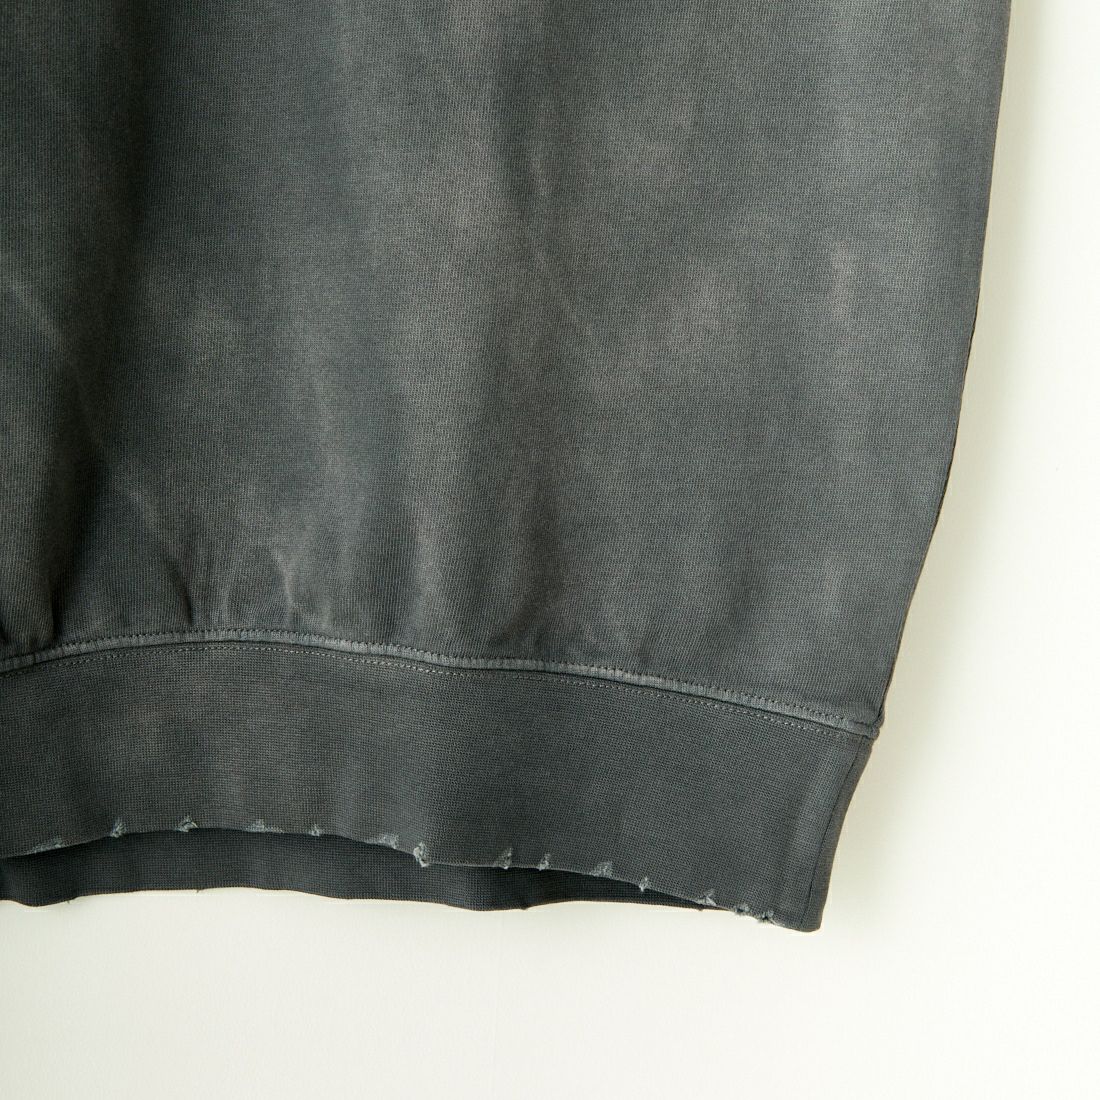 Jeans Factory Clothes [ジーンズファクトリークローズ] サンフェードダメージカットオフTシャツ [2421-410IN] BLACK